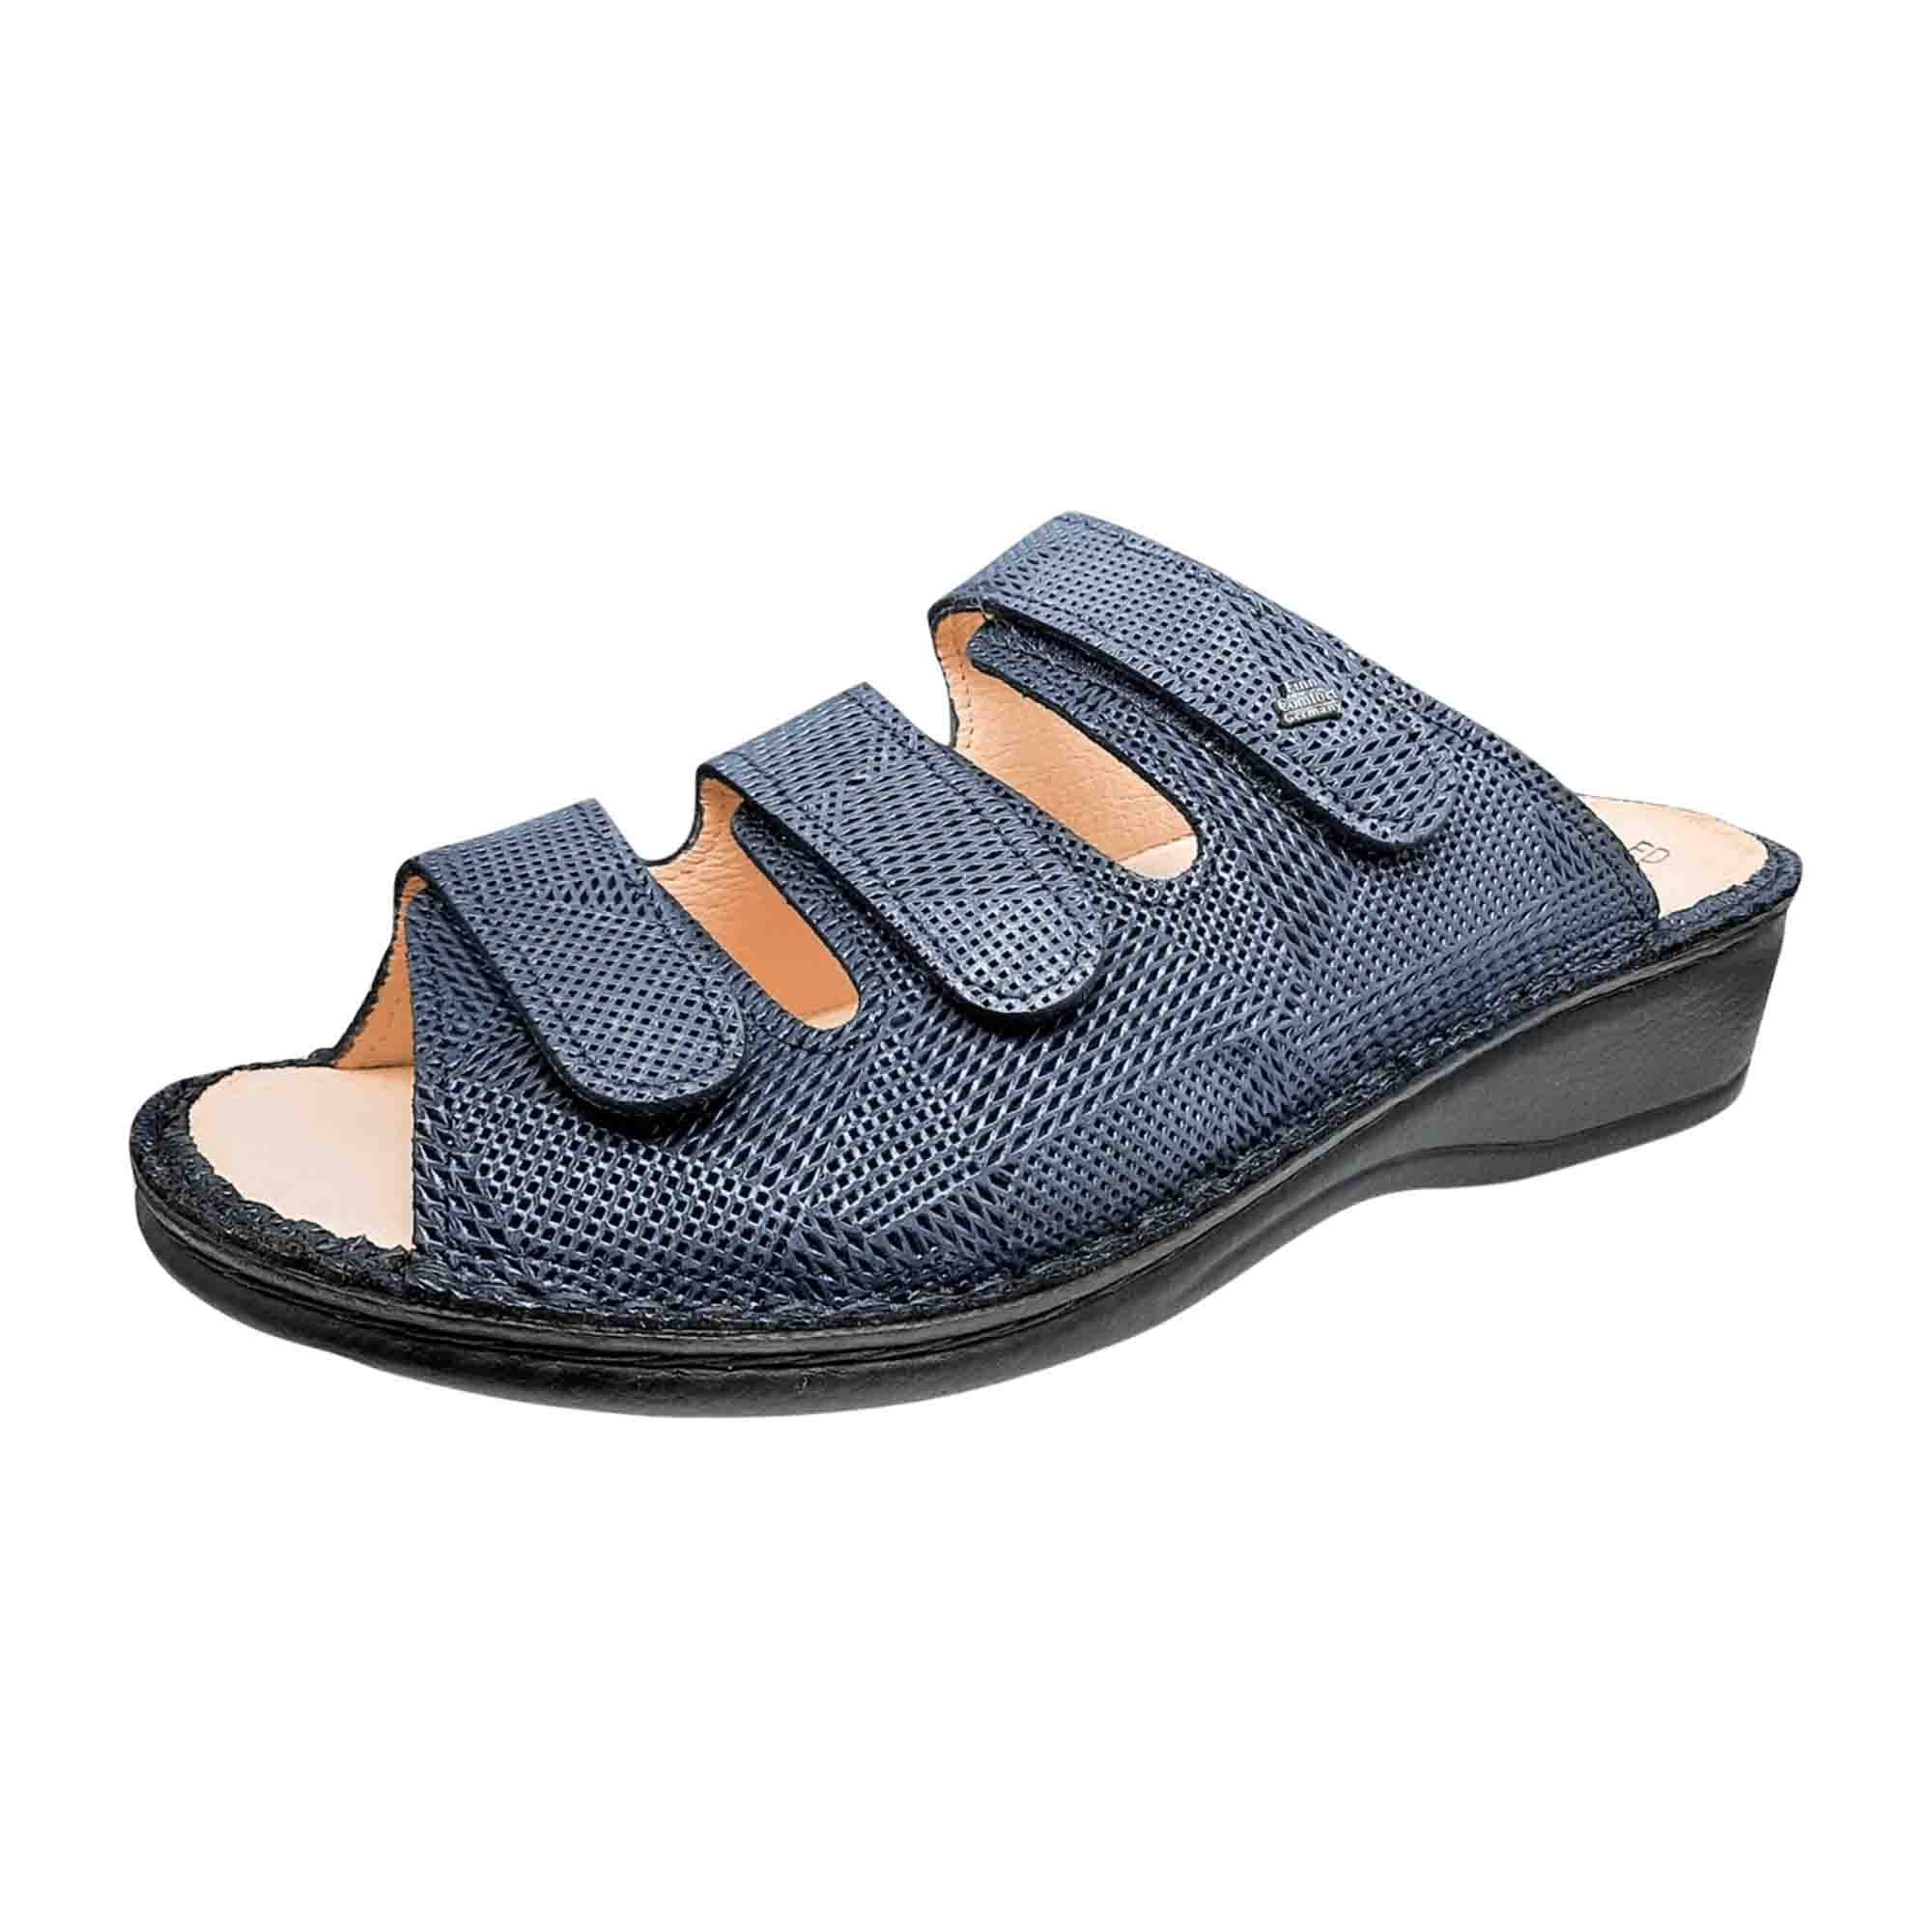 Finn Comfort Pisa Women's Sandals - Stylish & Comfortable Blue Footwear